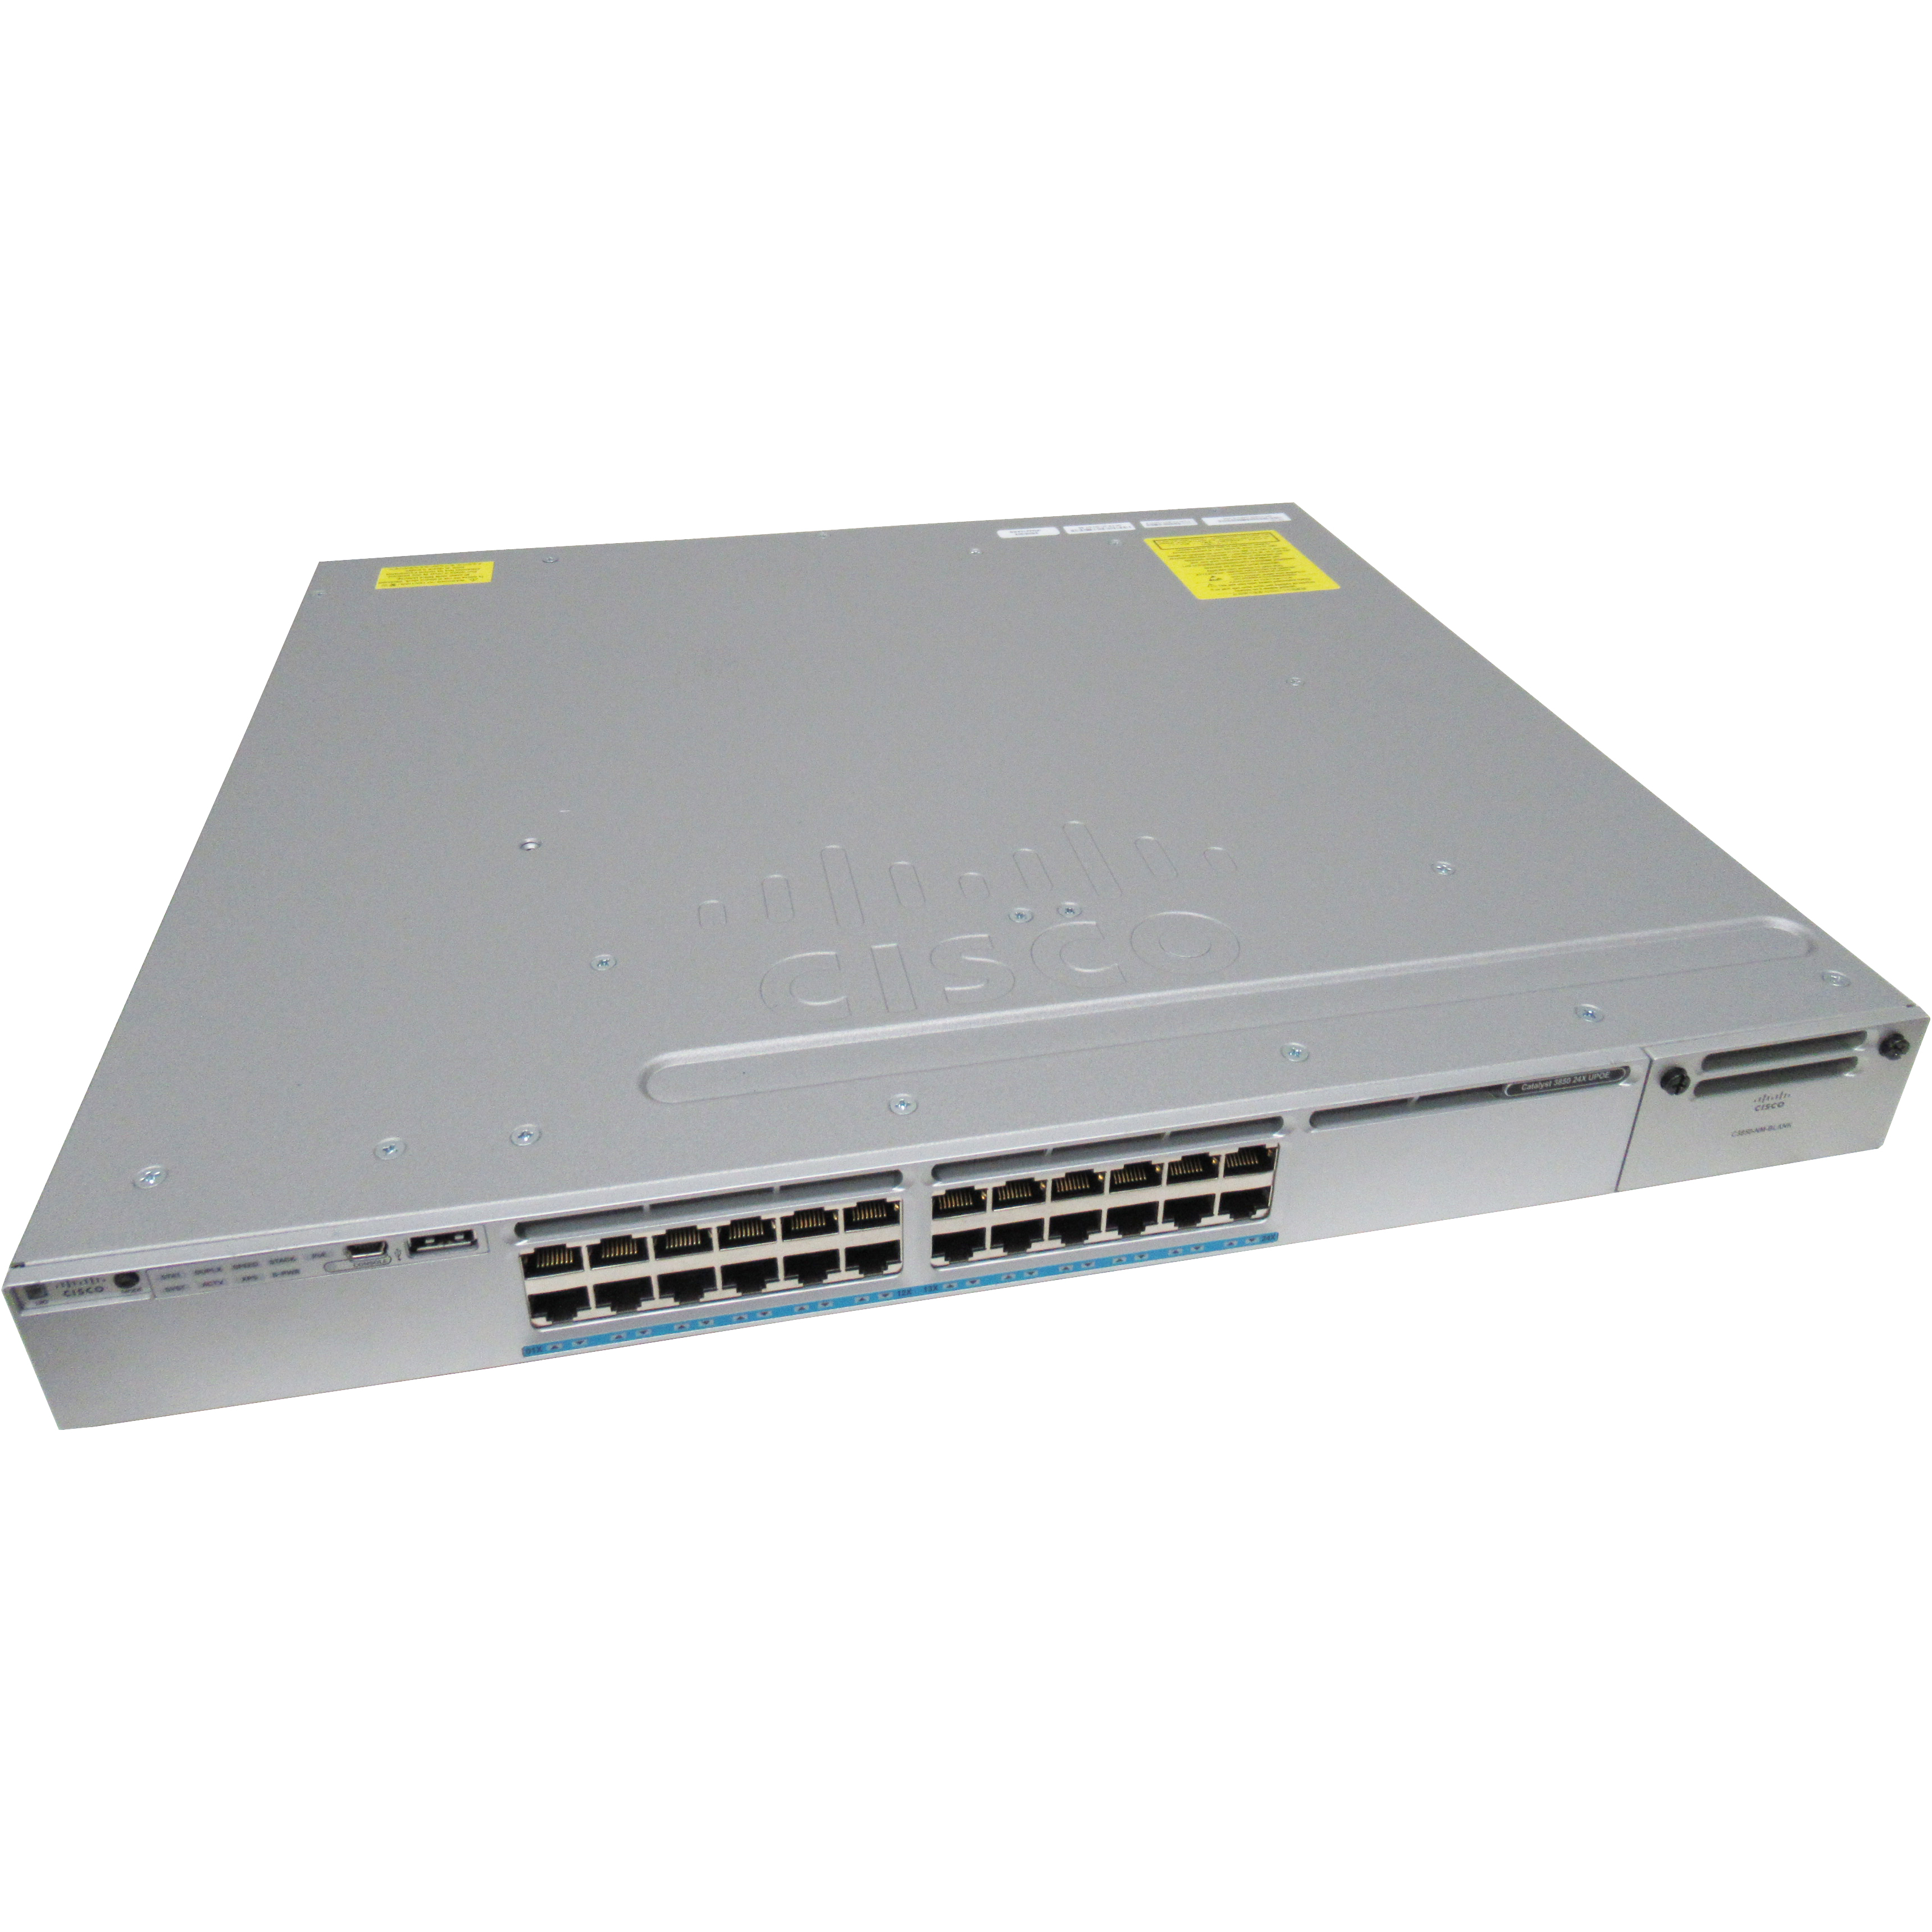 Cisco WS-C3850-24XU-L